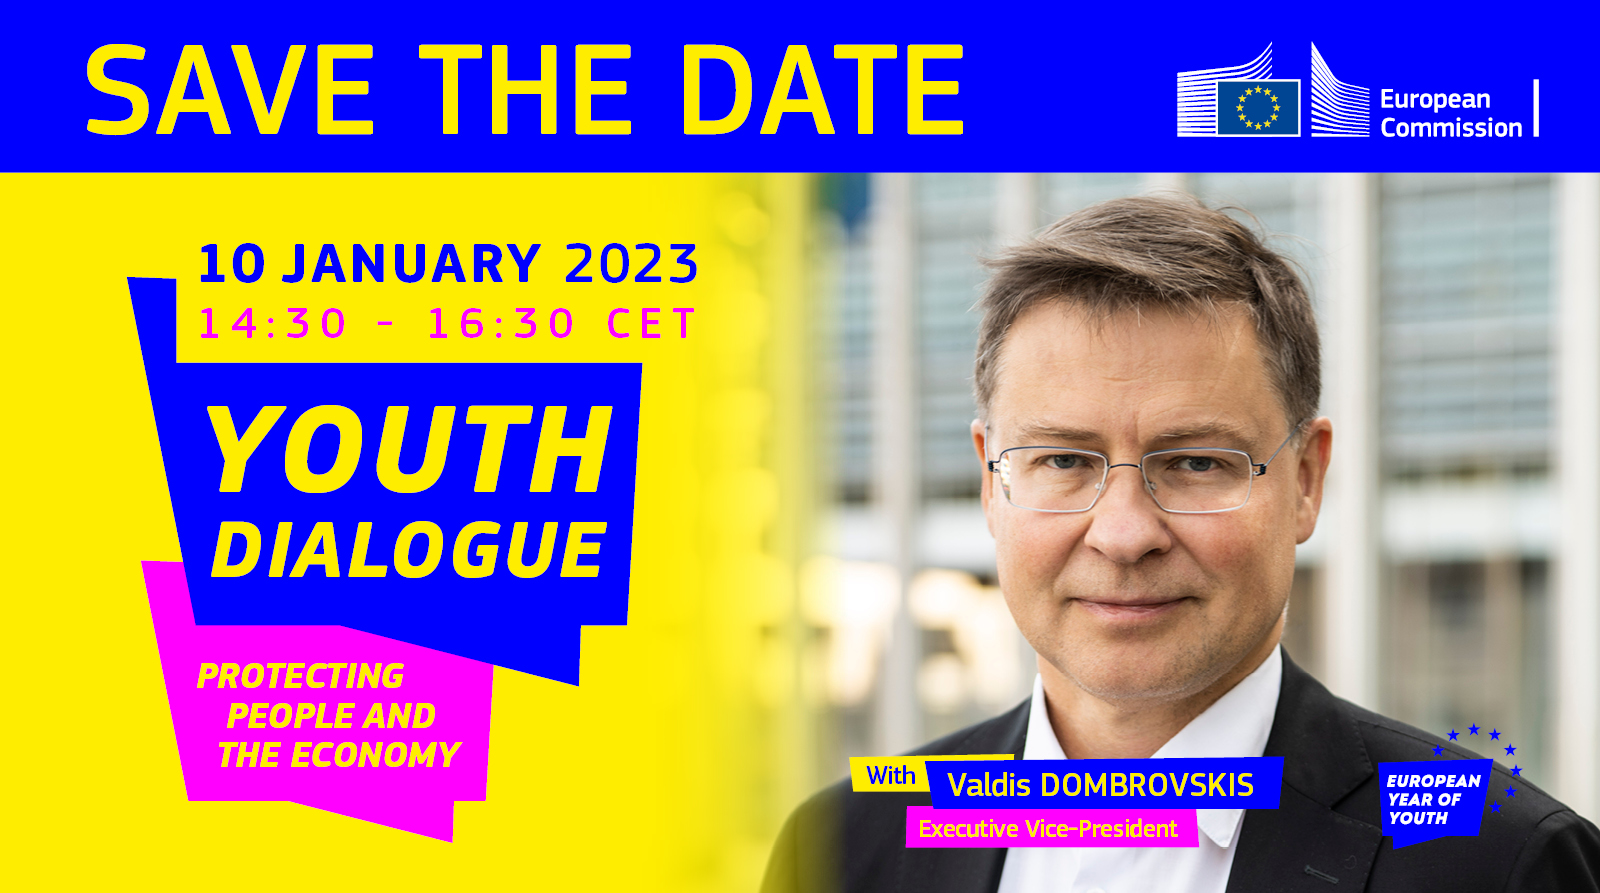 Visual of Executive Vice-President Dombrovskis